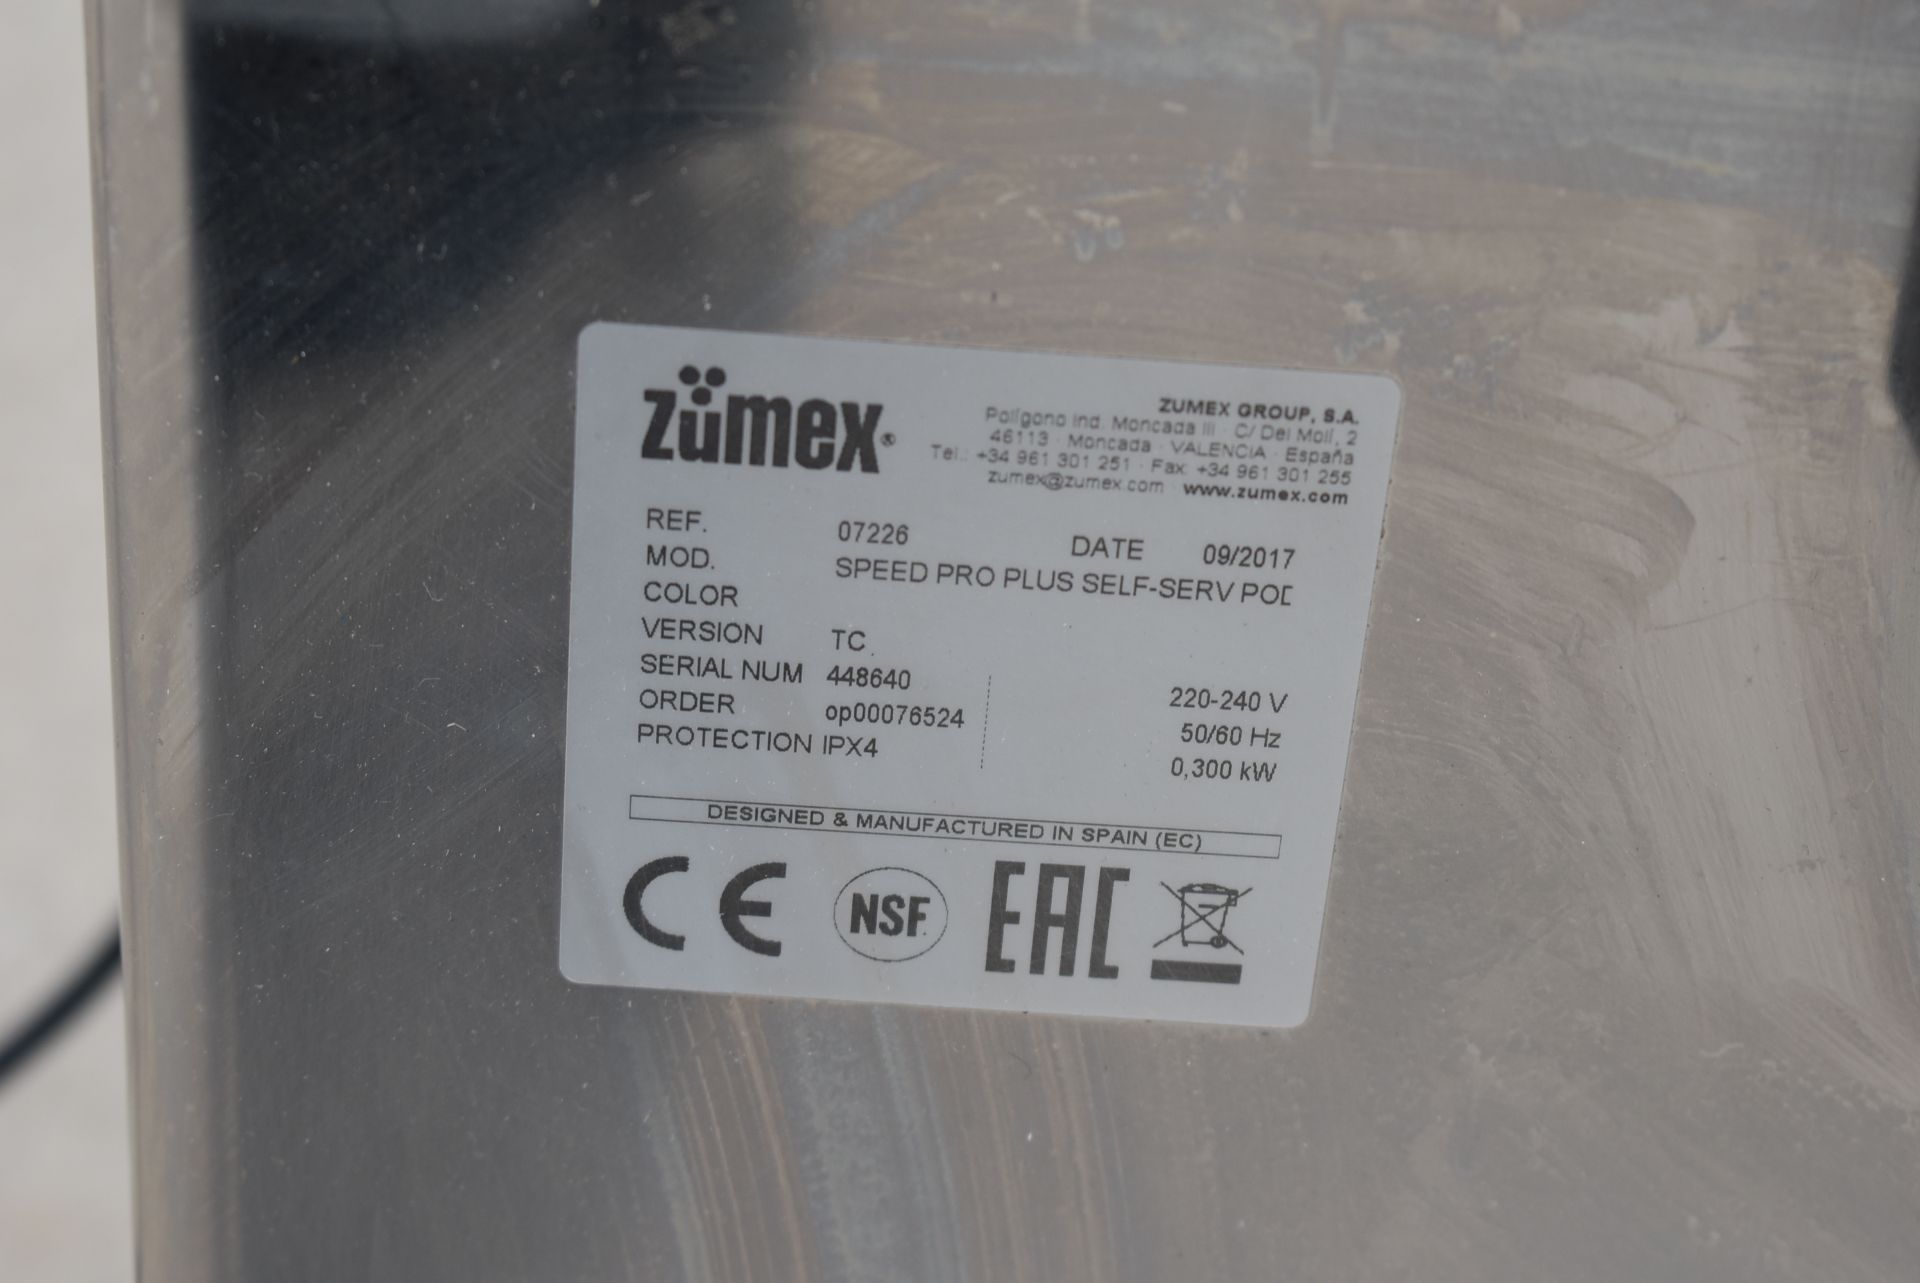 1 x Zumex Speed S +Plus Self-Service Podium Commercial Citrus Juicer - Manufactured in 2018 - - Image 4 of 5